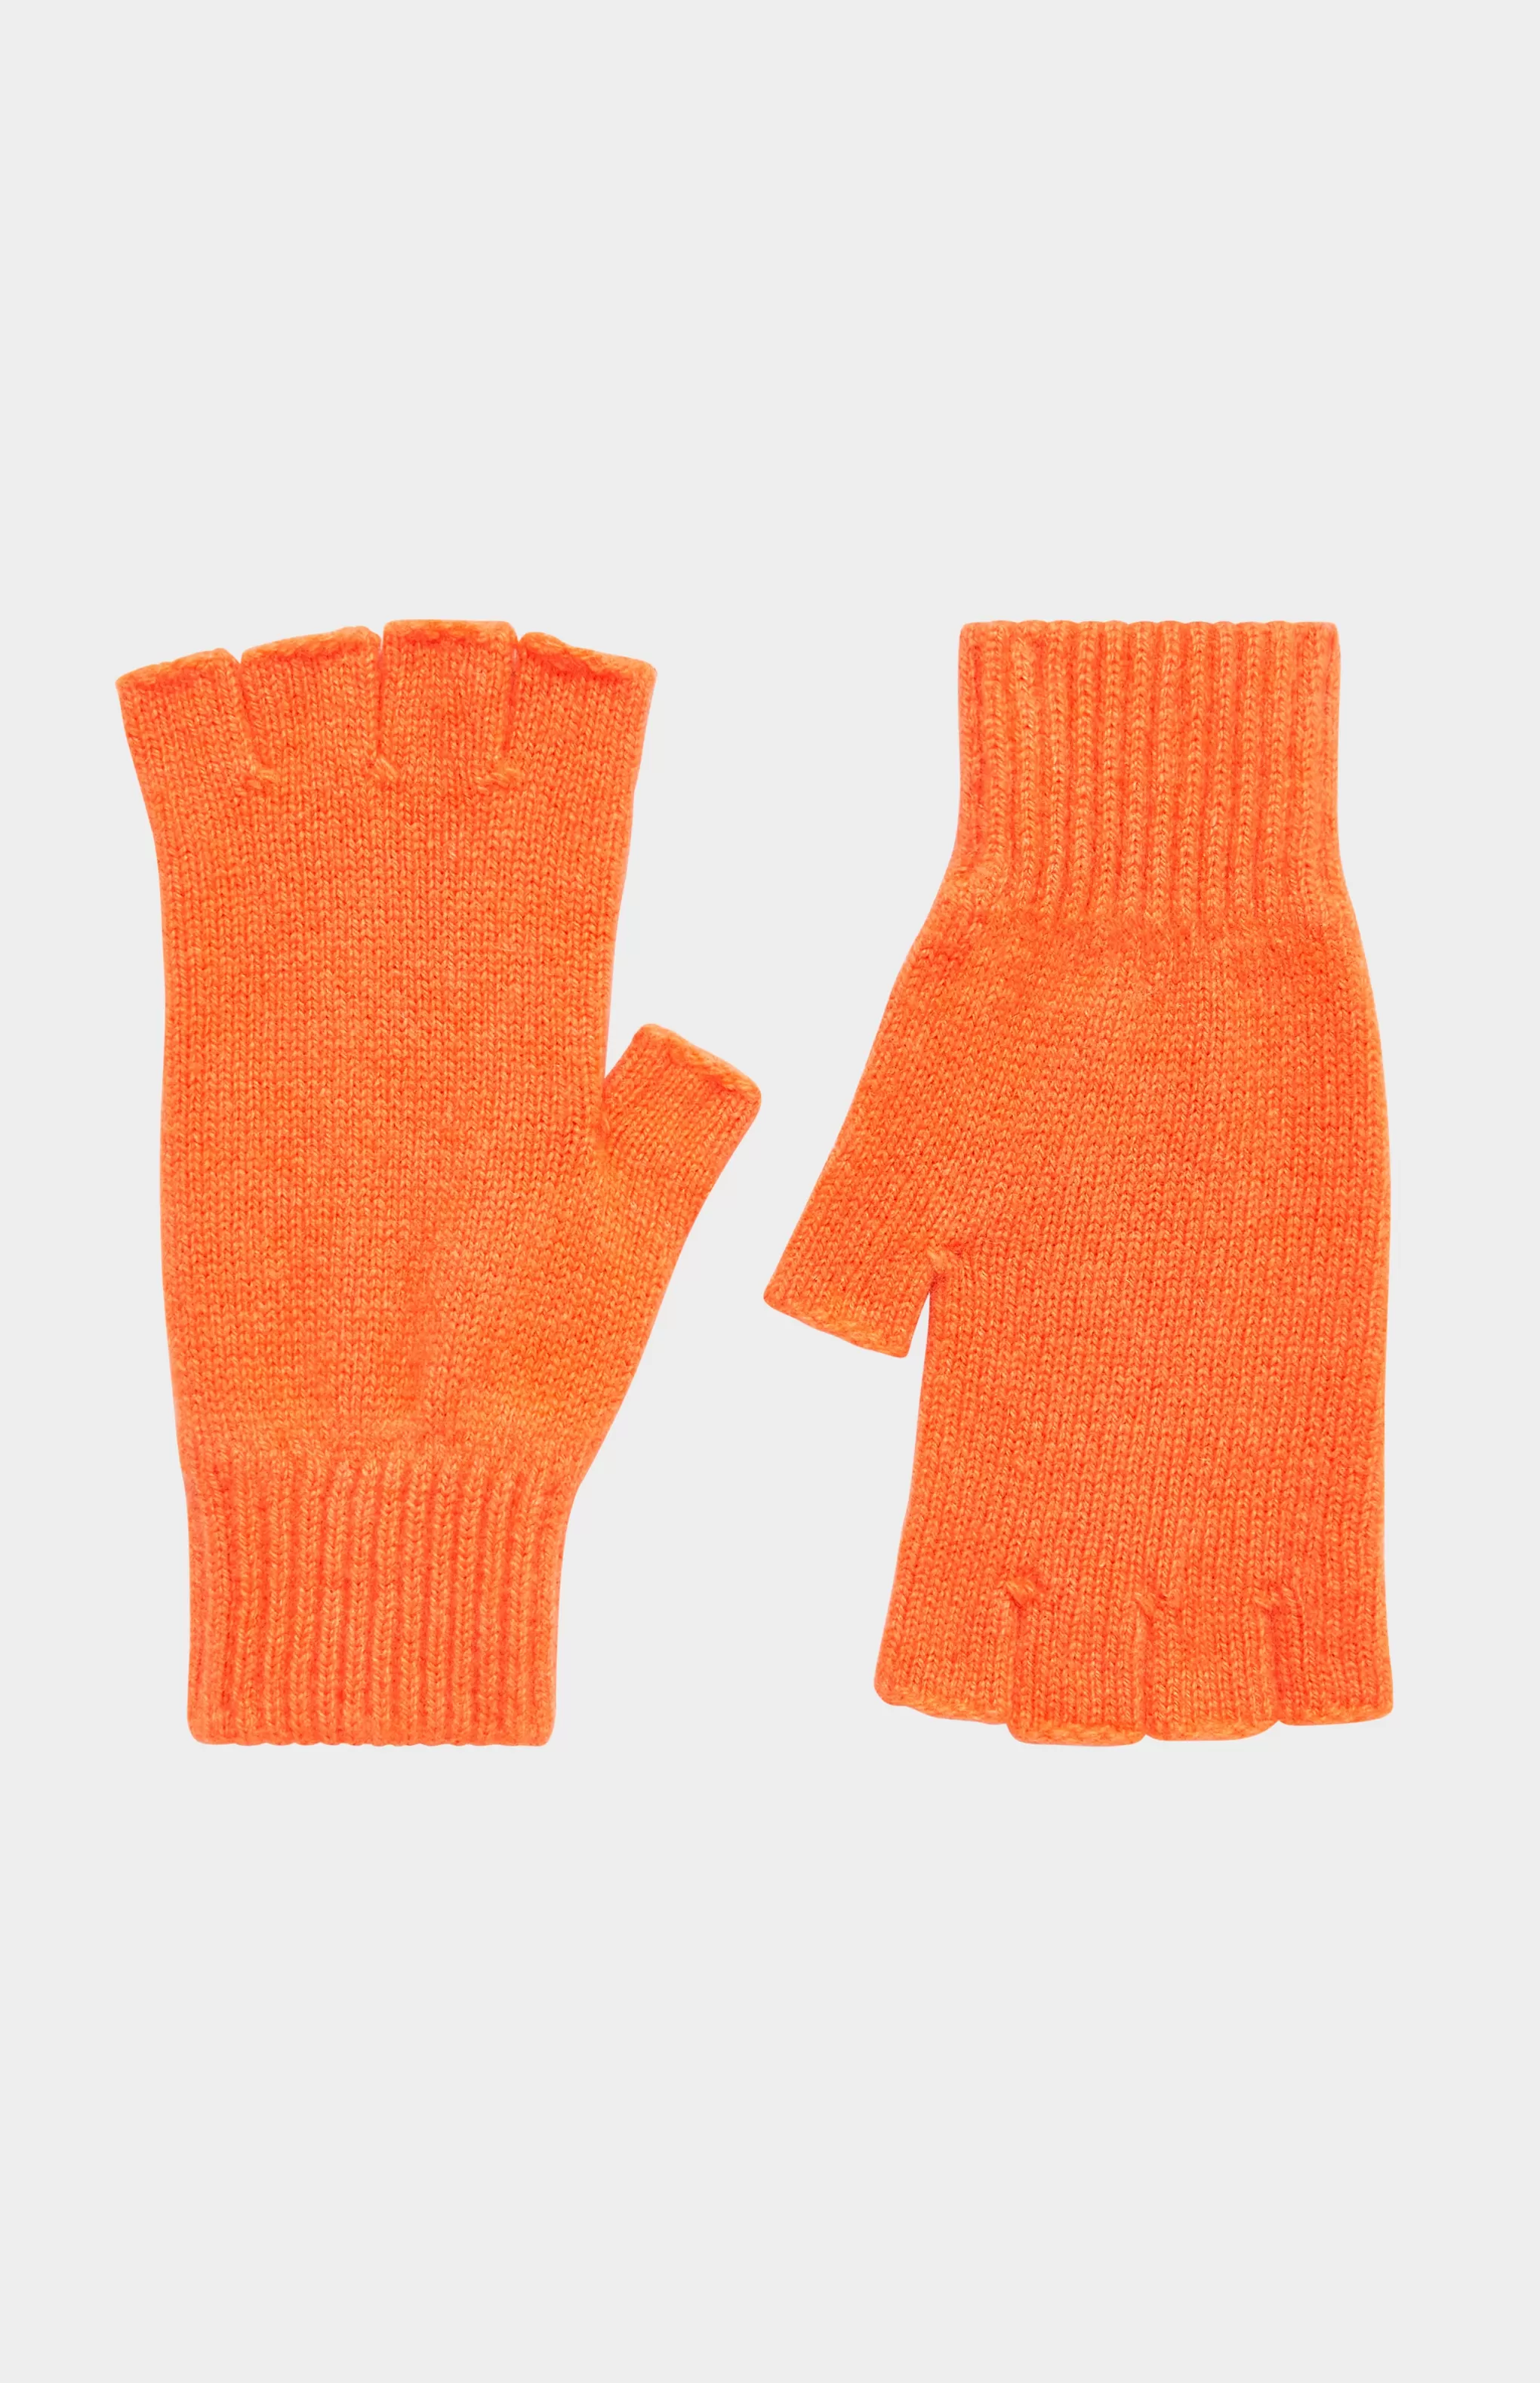 Cheap Cosy Cashmere Fingerless Glove In Apricot Orange Men/Women Gloves